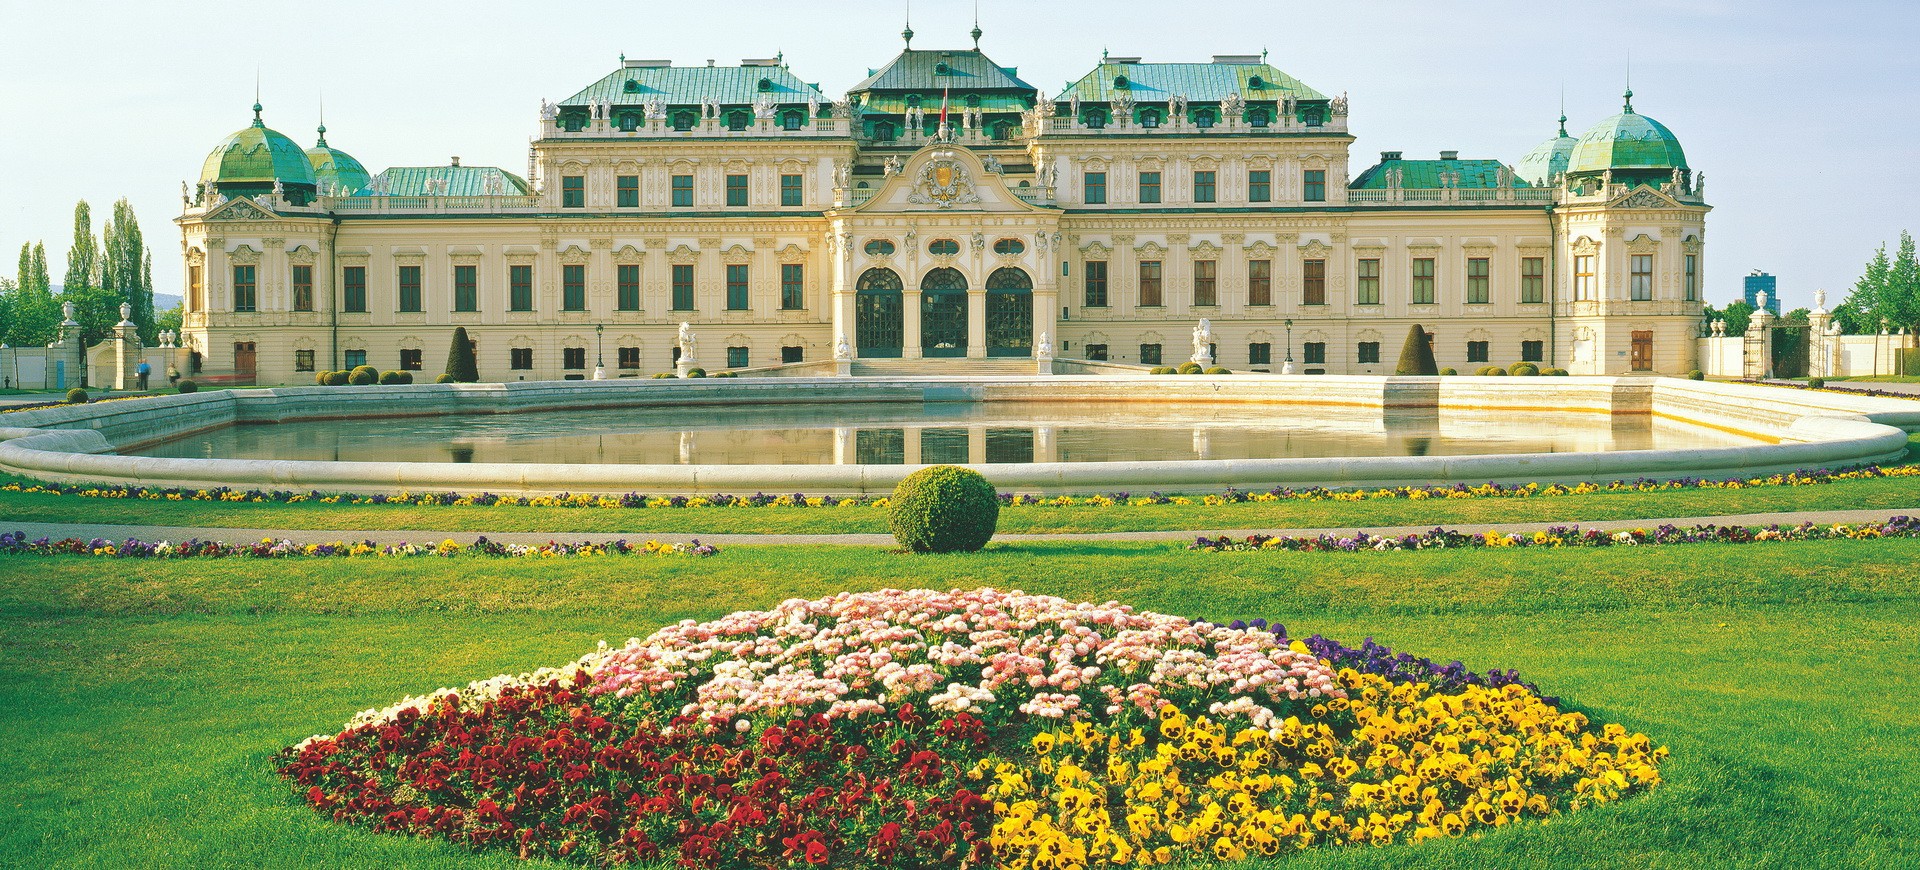 Autriche Vienne Chateau Belvedere